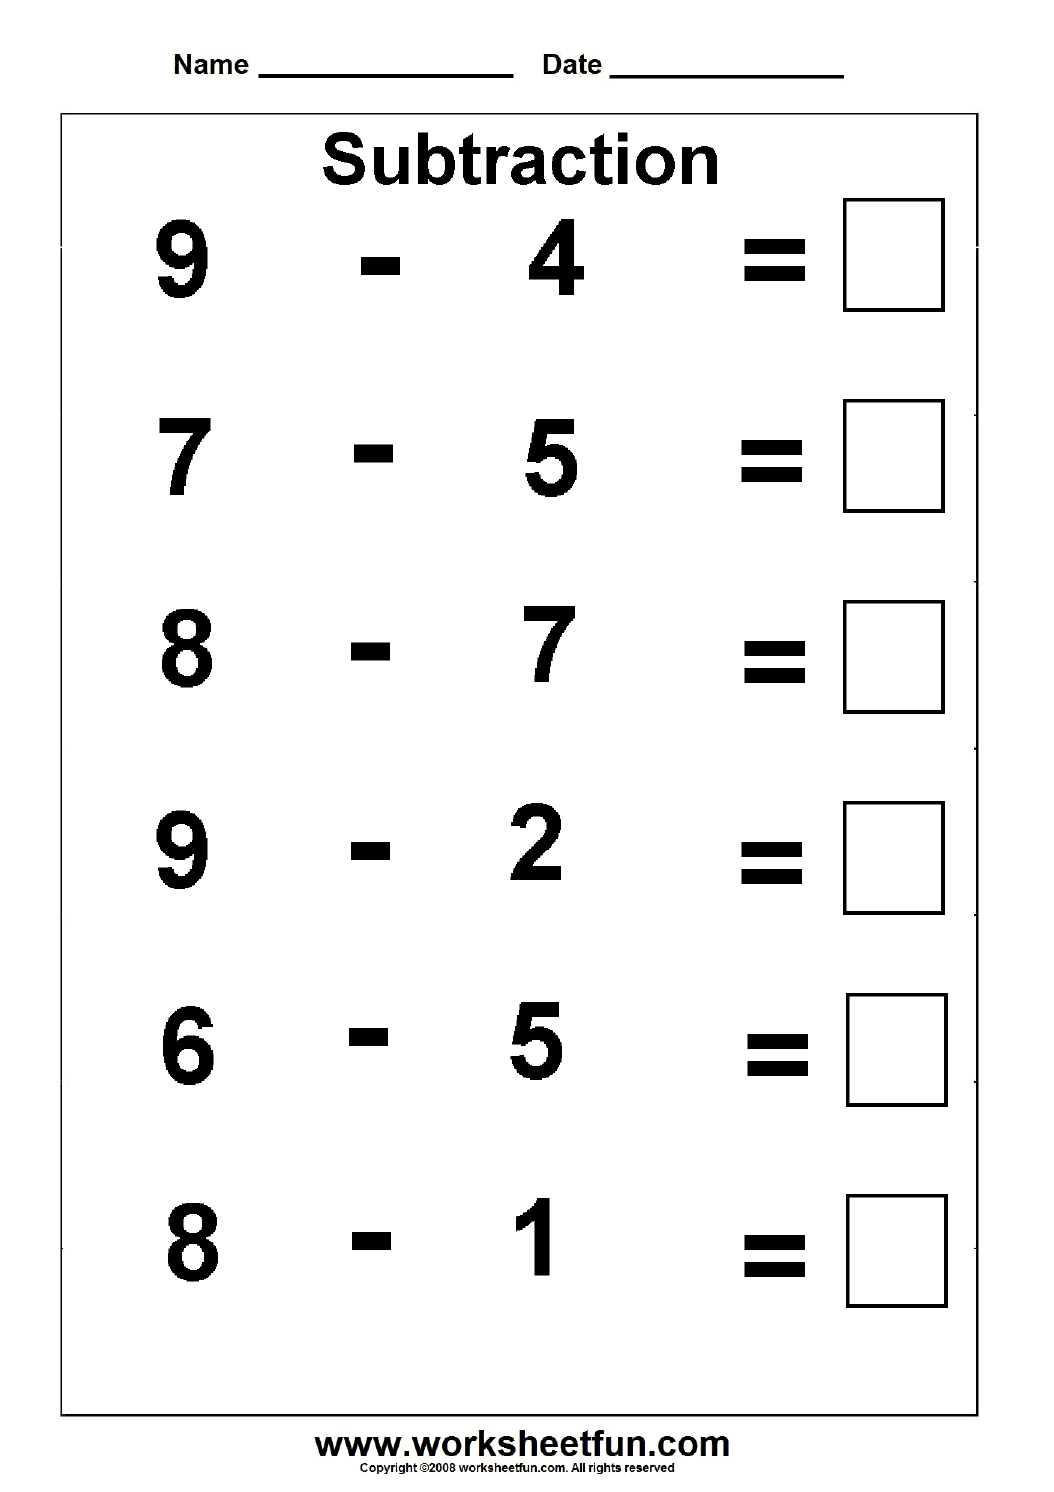 15-best-images-of-worksheets-subtraction-number-line-subtraction